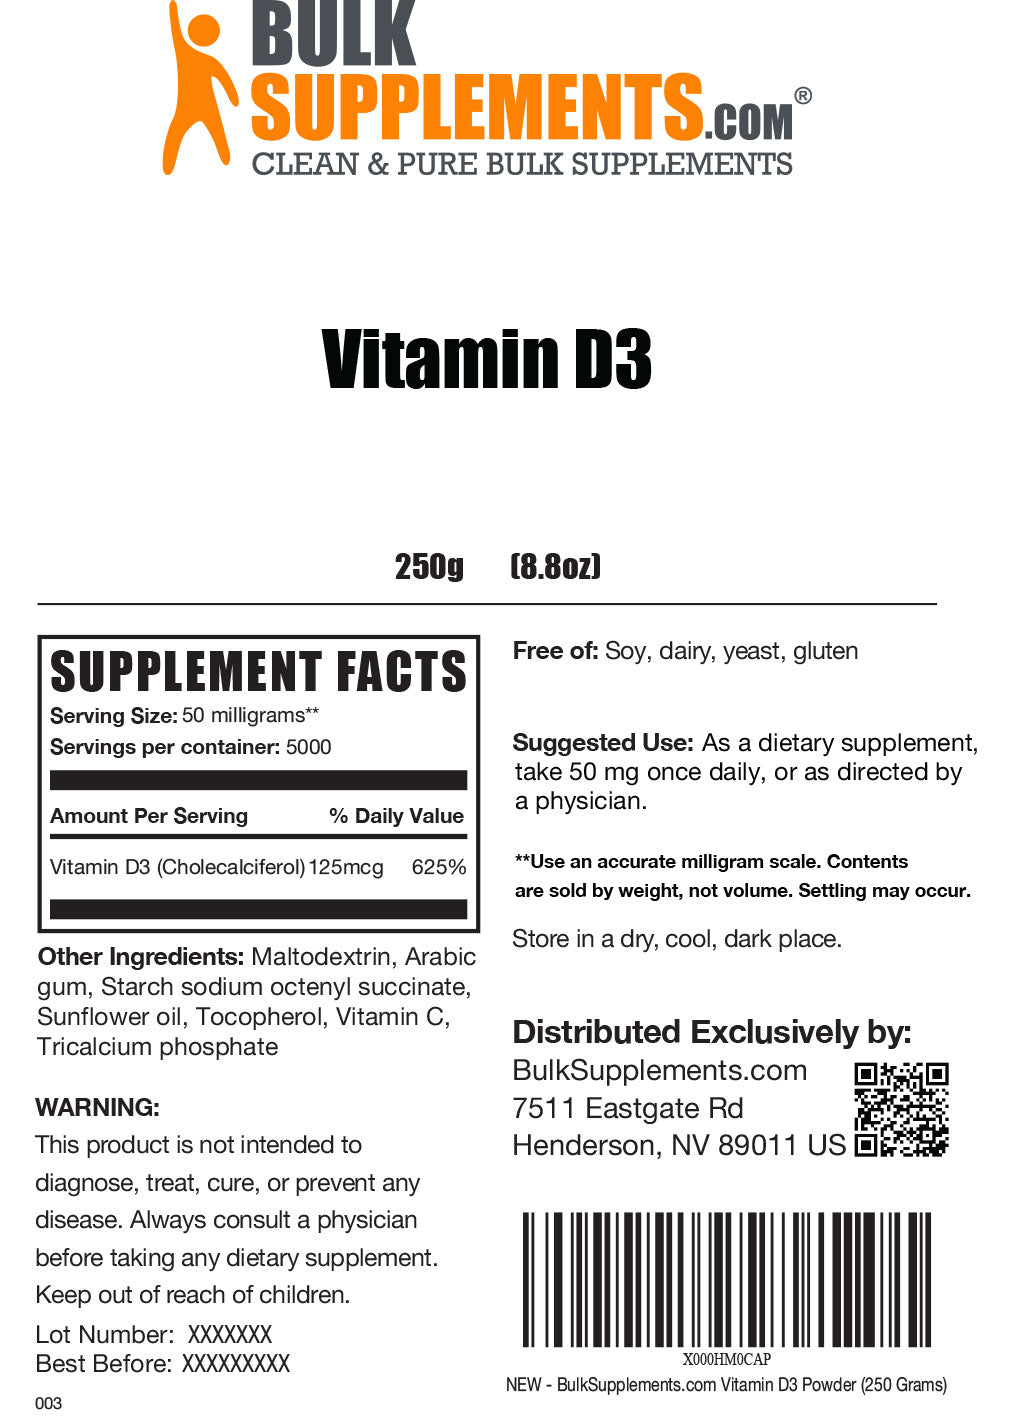 Vitamin D3 powder label 250g